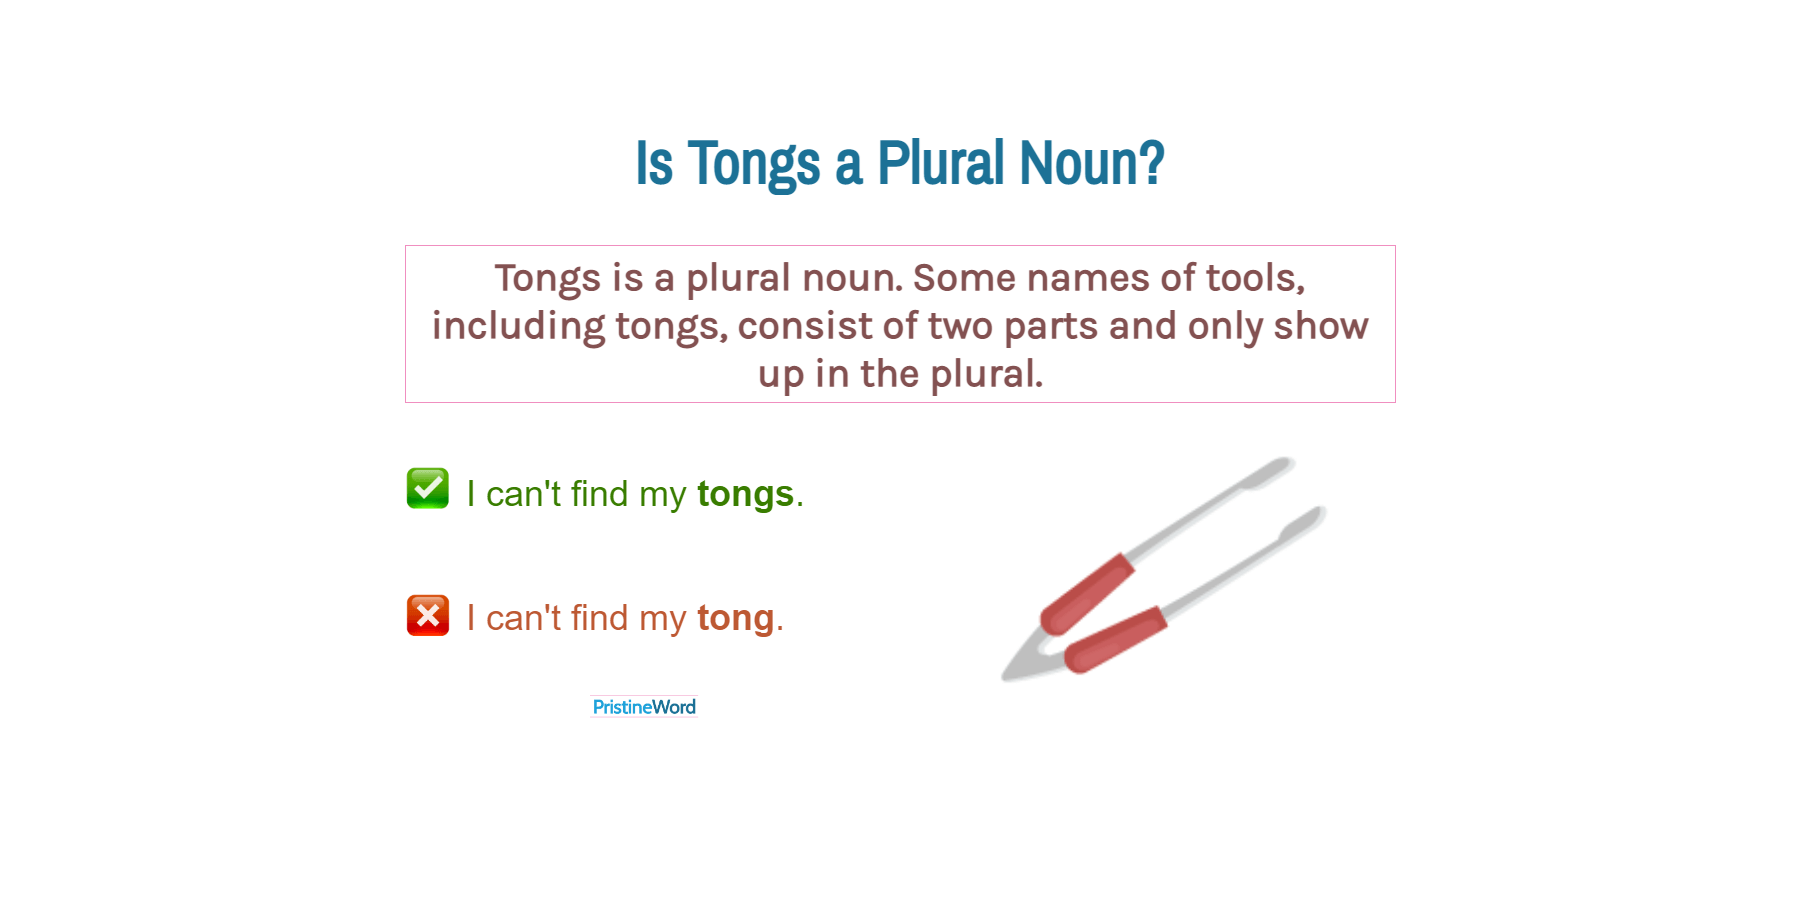 Is Tongs a Plural Noun?